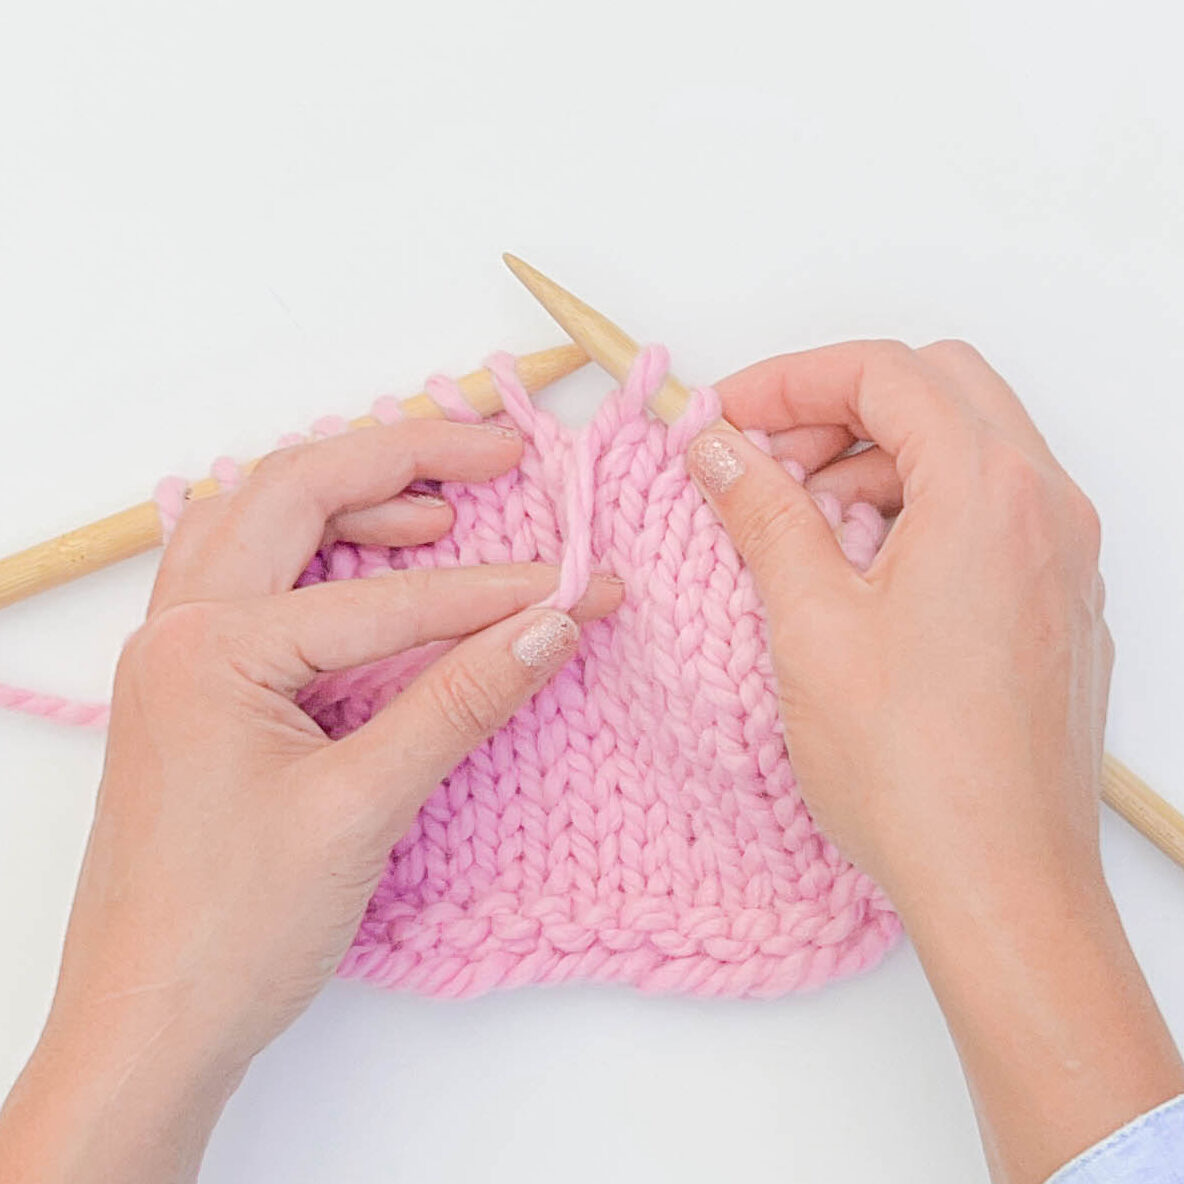 Yarn Over on a knit row - Step 1